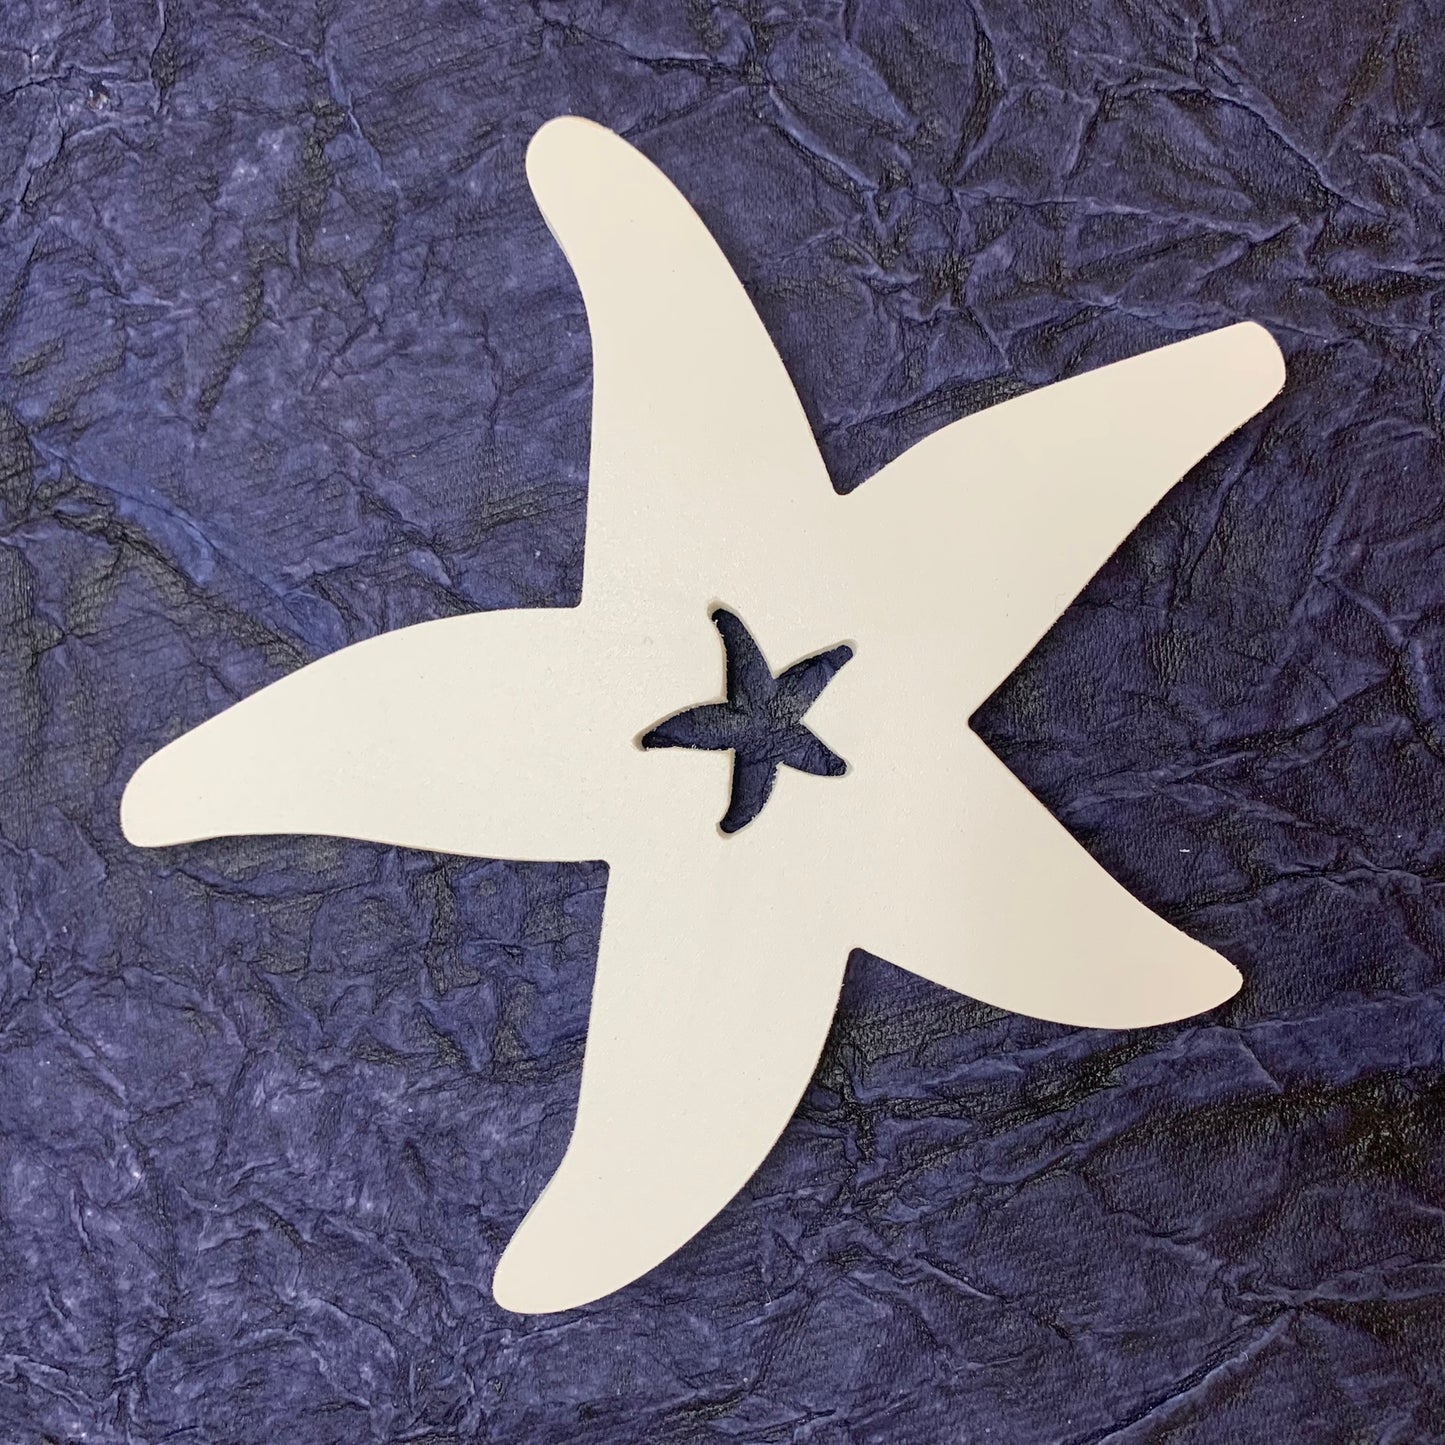 Shutter Embellishments - Starfish W/Star Wall Art Small approx 8X5, Custom, Outdoor Decor, Tropical, Ships Free to Mainland USA